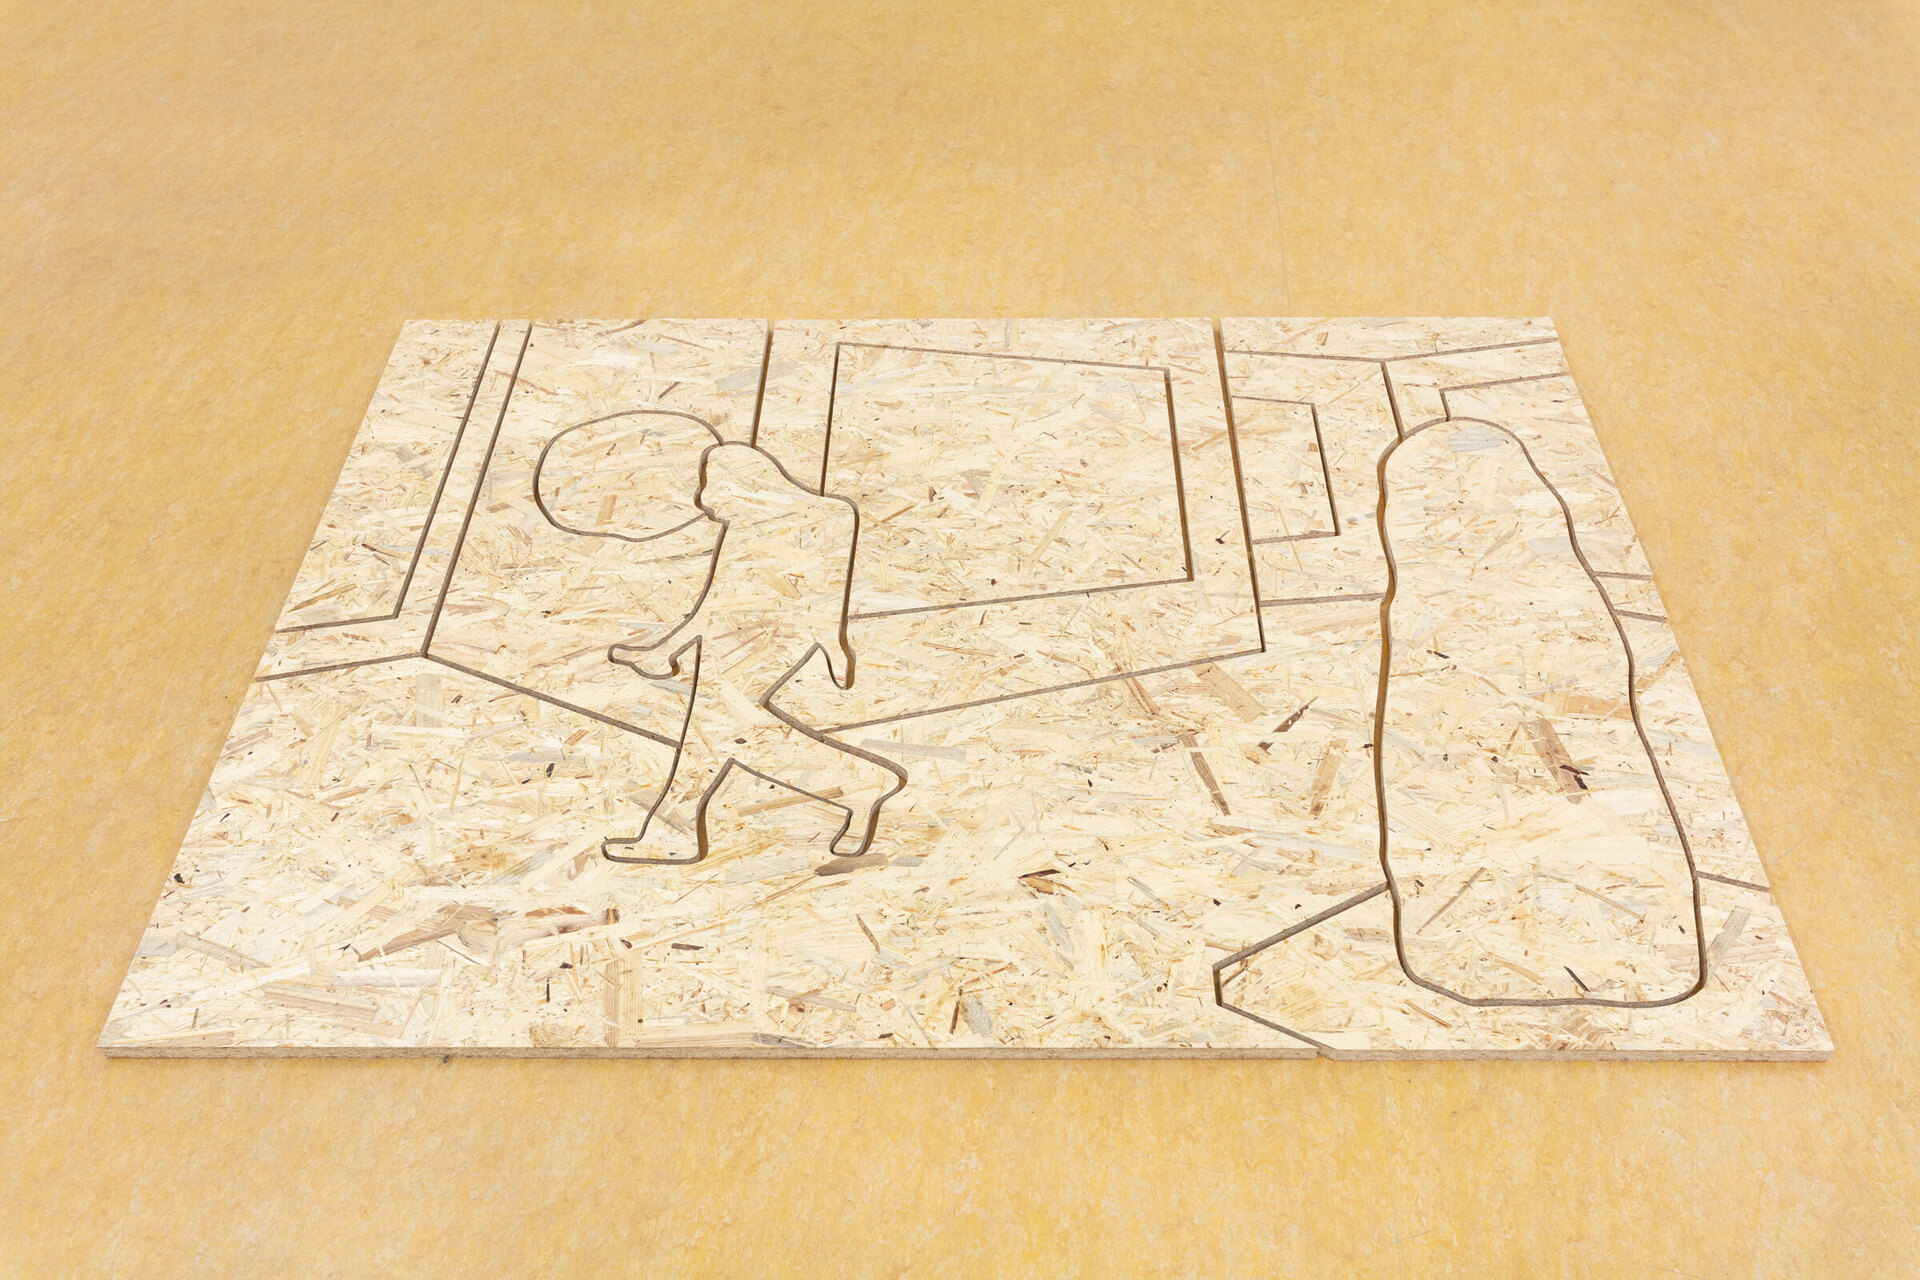 Sebastian Jung, Puzzle, 2021, CNC-cut OSB, 120 x 170 cm, multiple, open edition